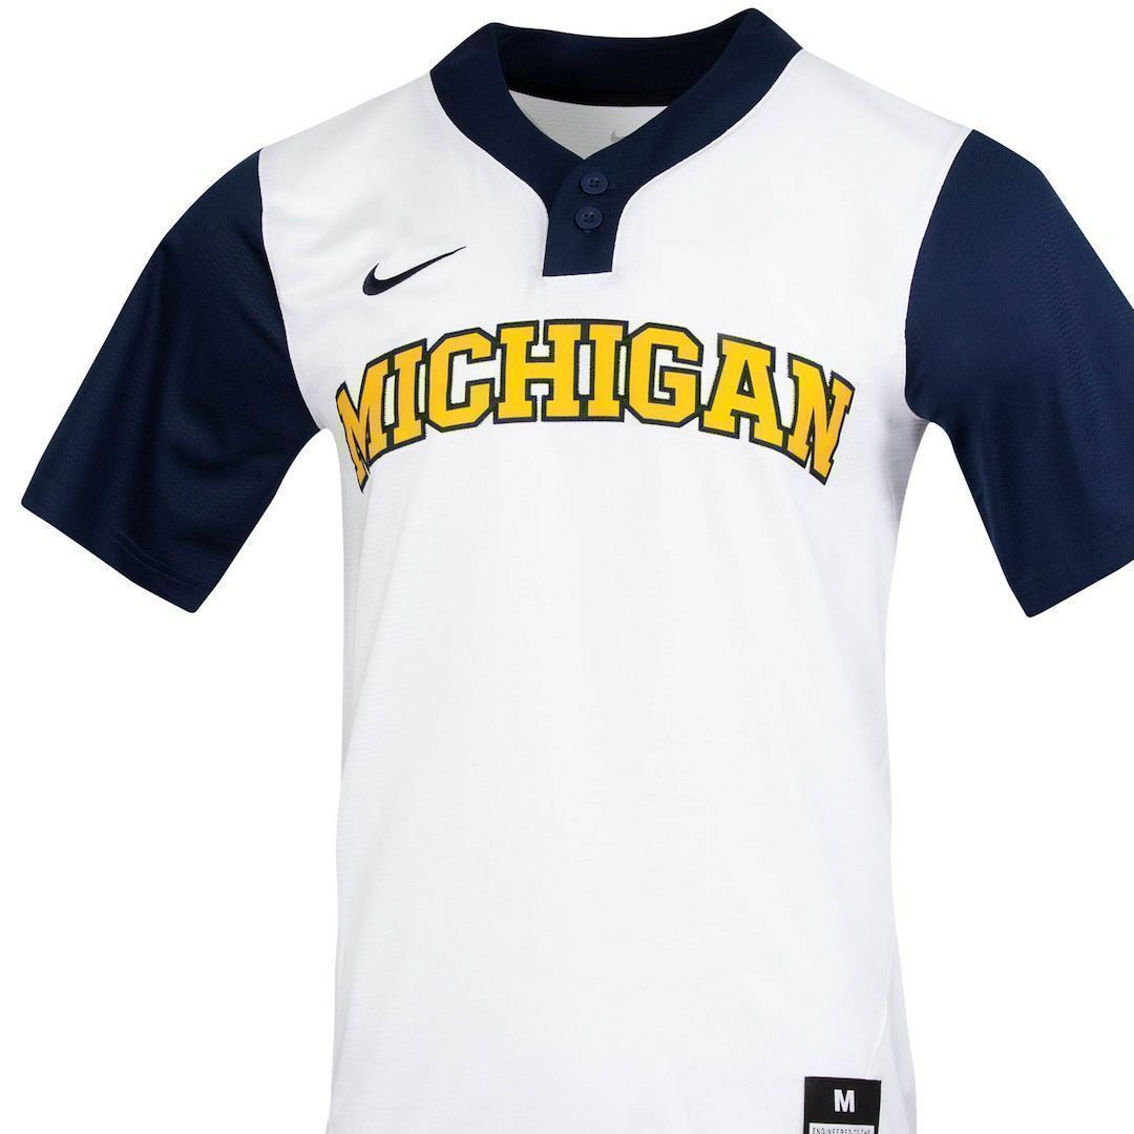 Nike Unisex White Michigan Wolverines Replica Softball Jersey - Image 3 of 4